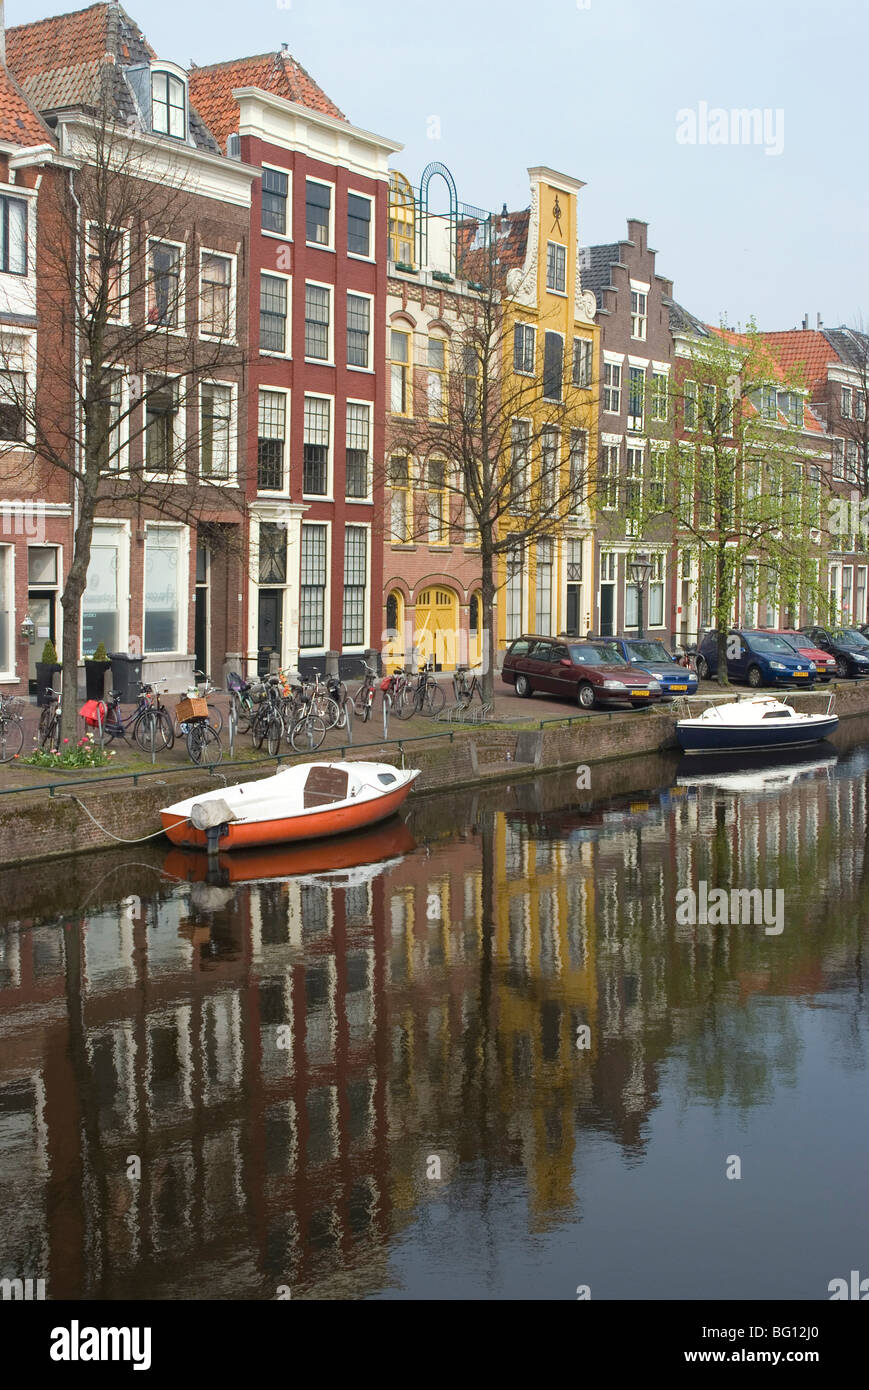 Houses along canal, Leiden, Netherlands, Europe Stock Photo